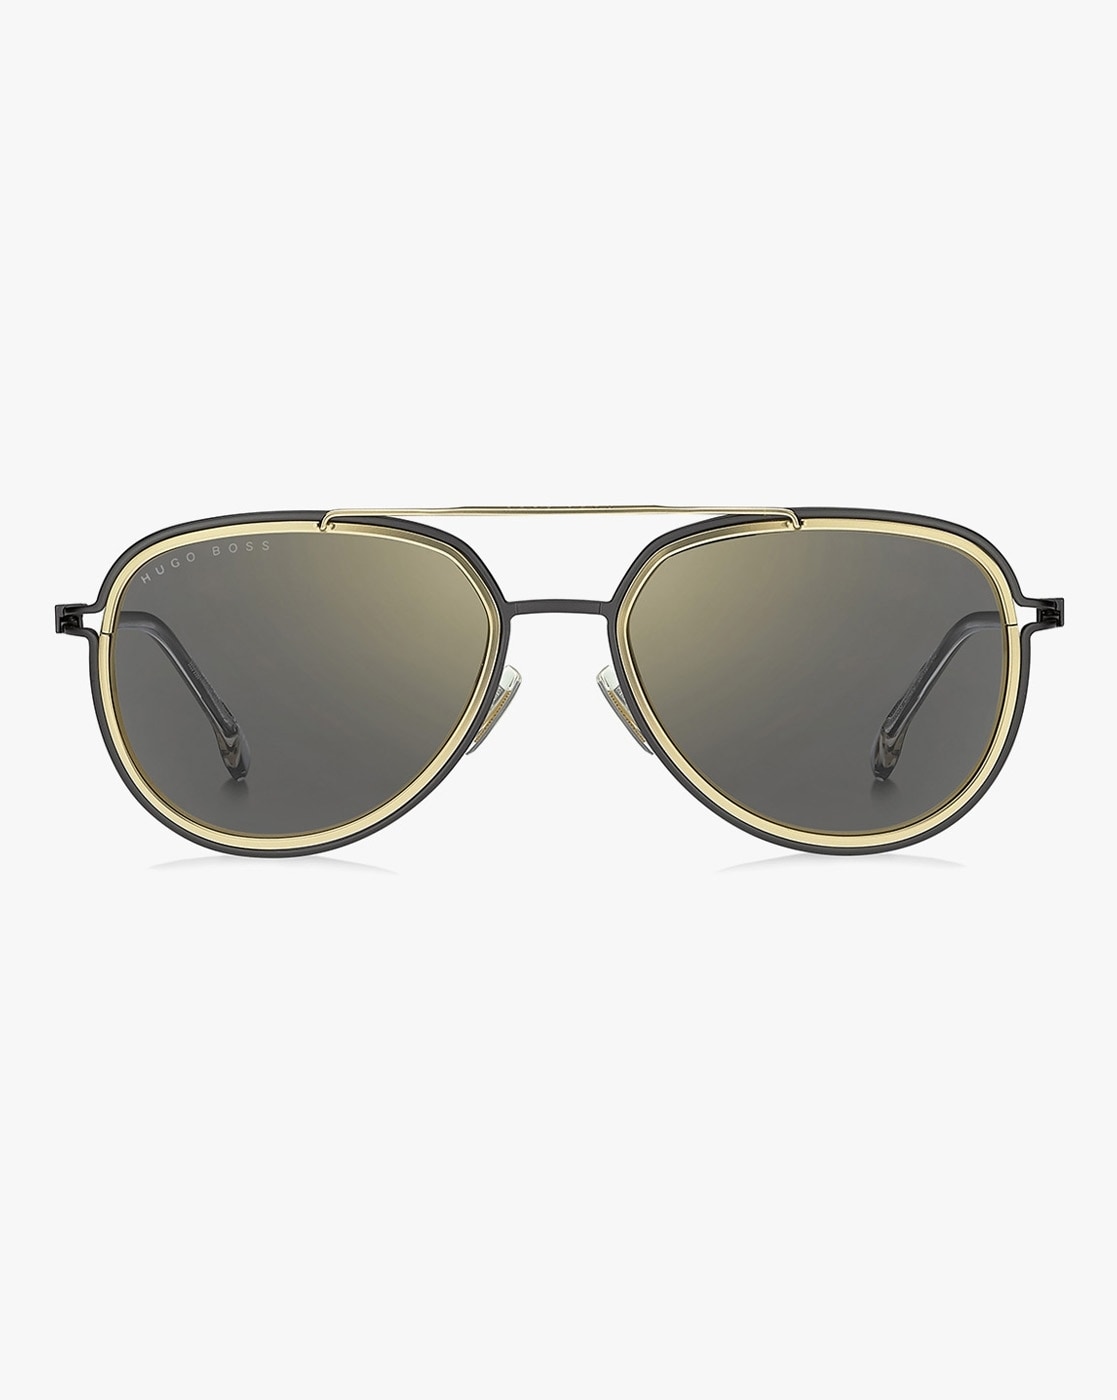 HUGO BOSS 1182/S PJP KU | Sunglasses | Florentine Eyewear